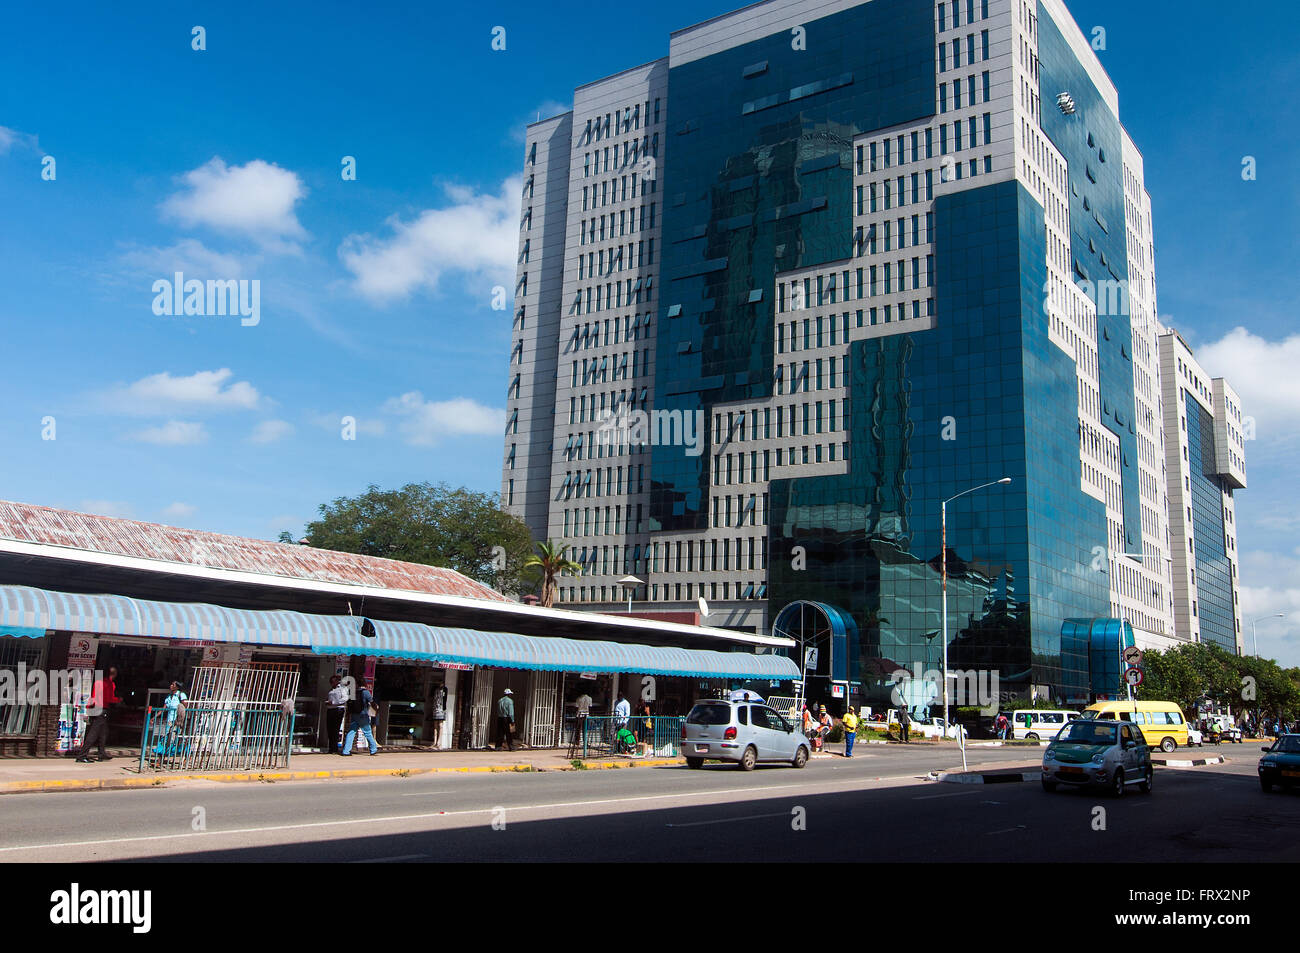 SSC building, Sam Nujoma Street, CBD, Harare, Zimbabwe Stock Photo